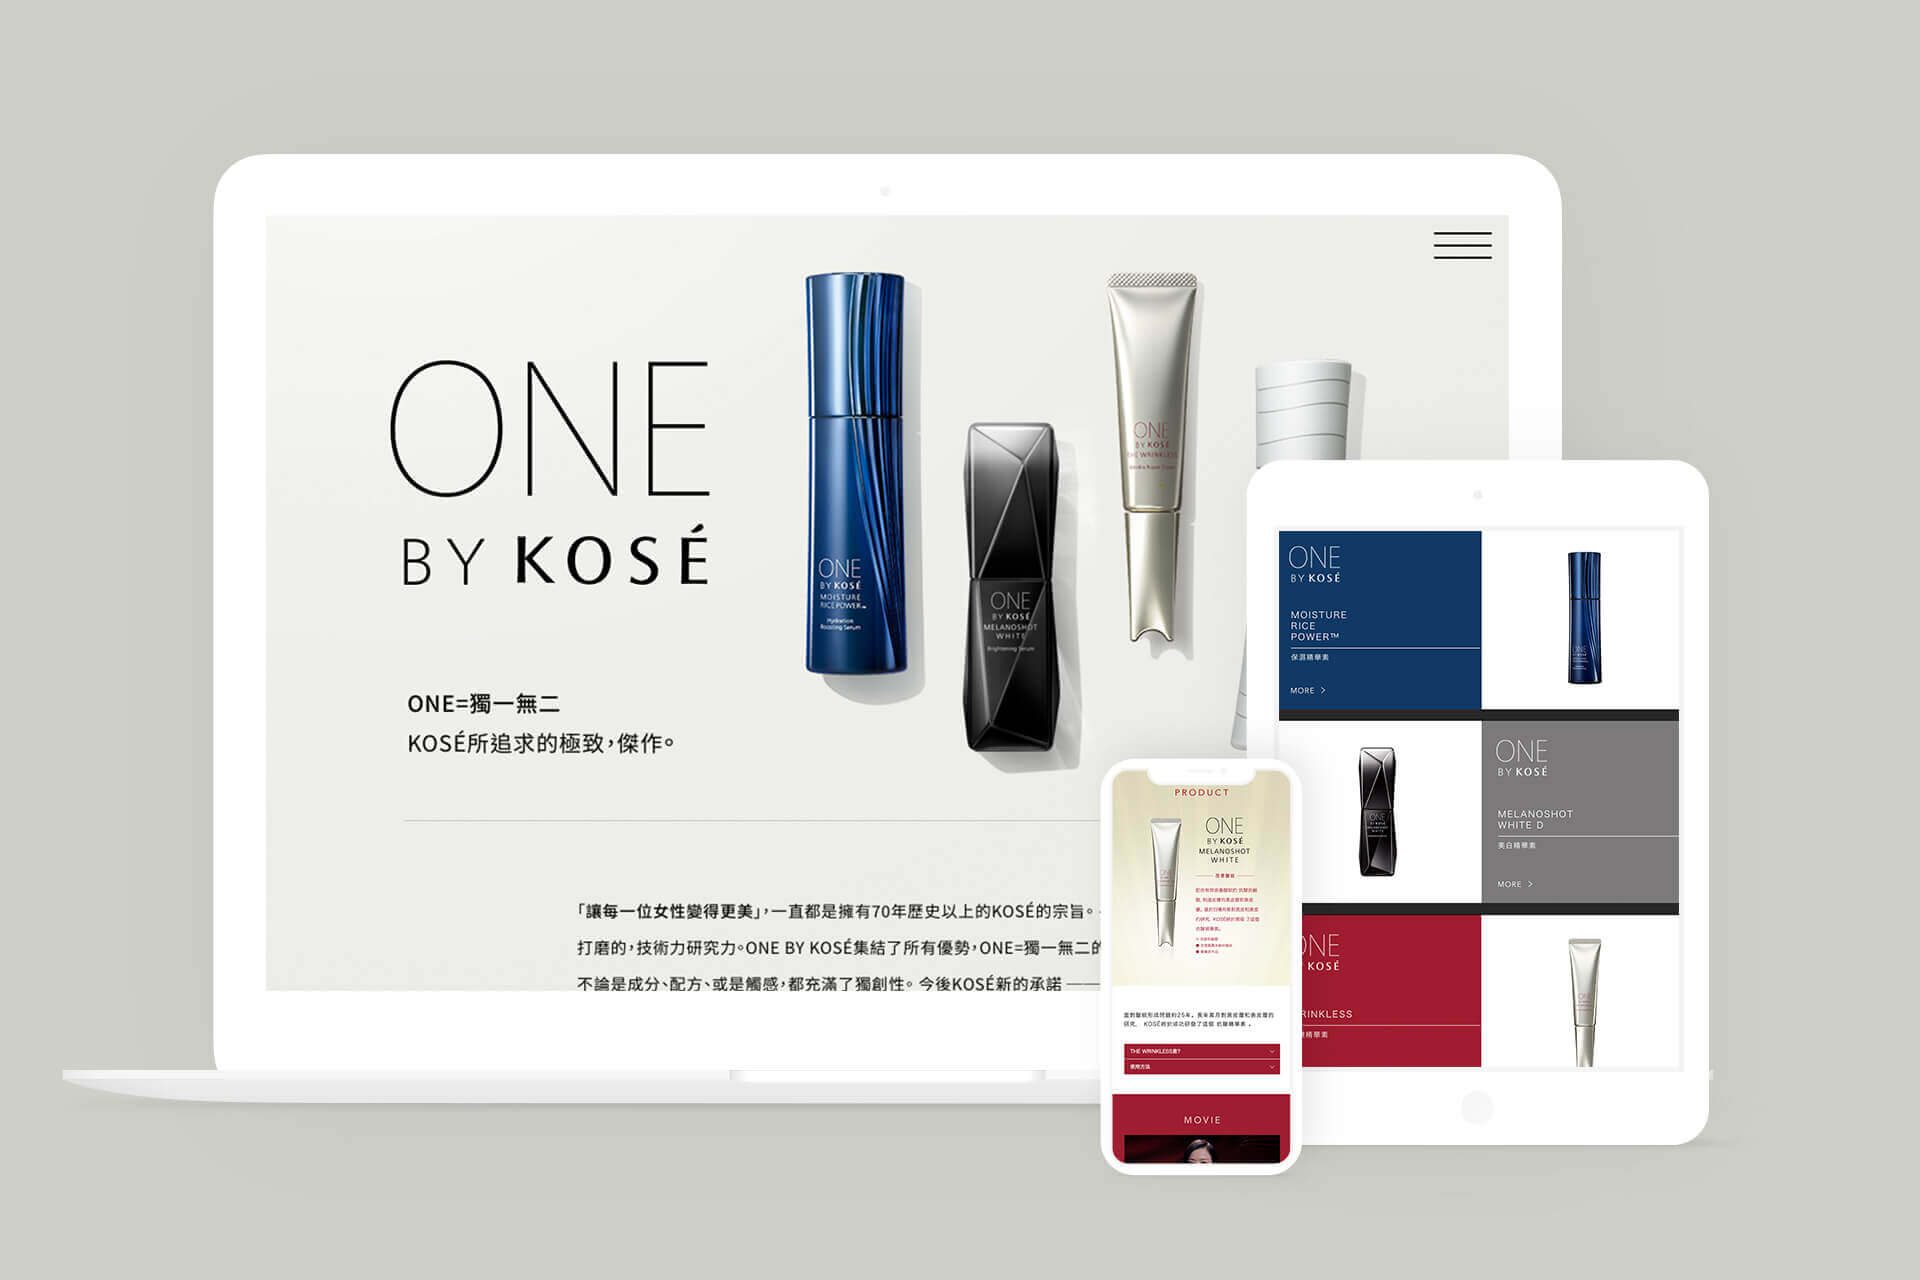 Kose - One by Kose